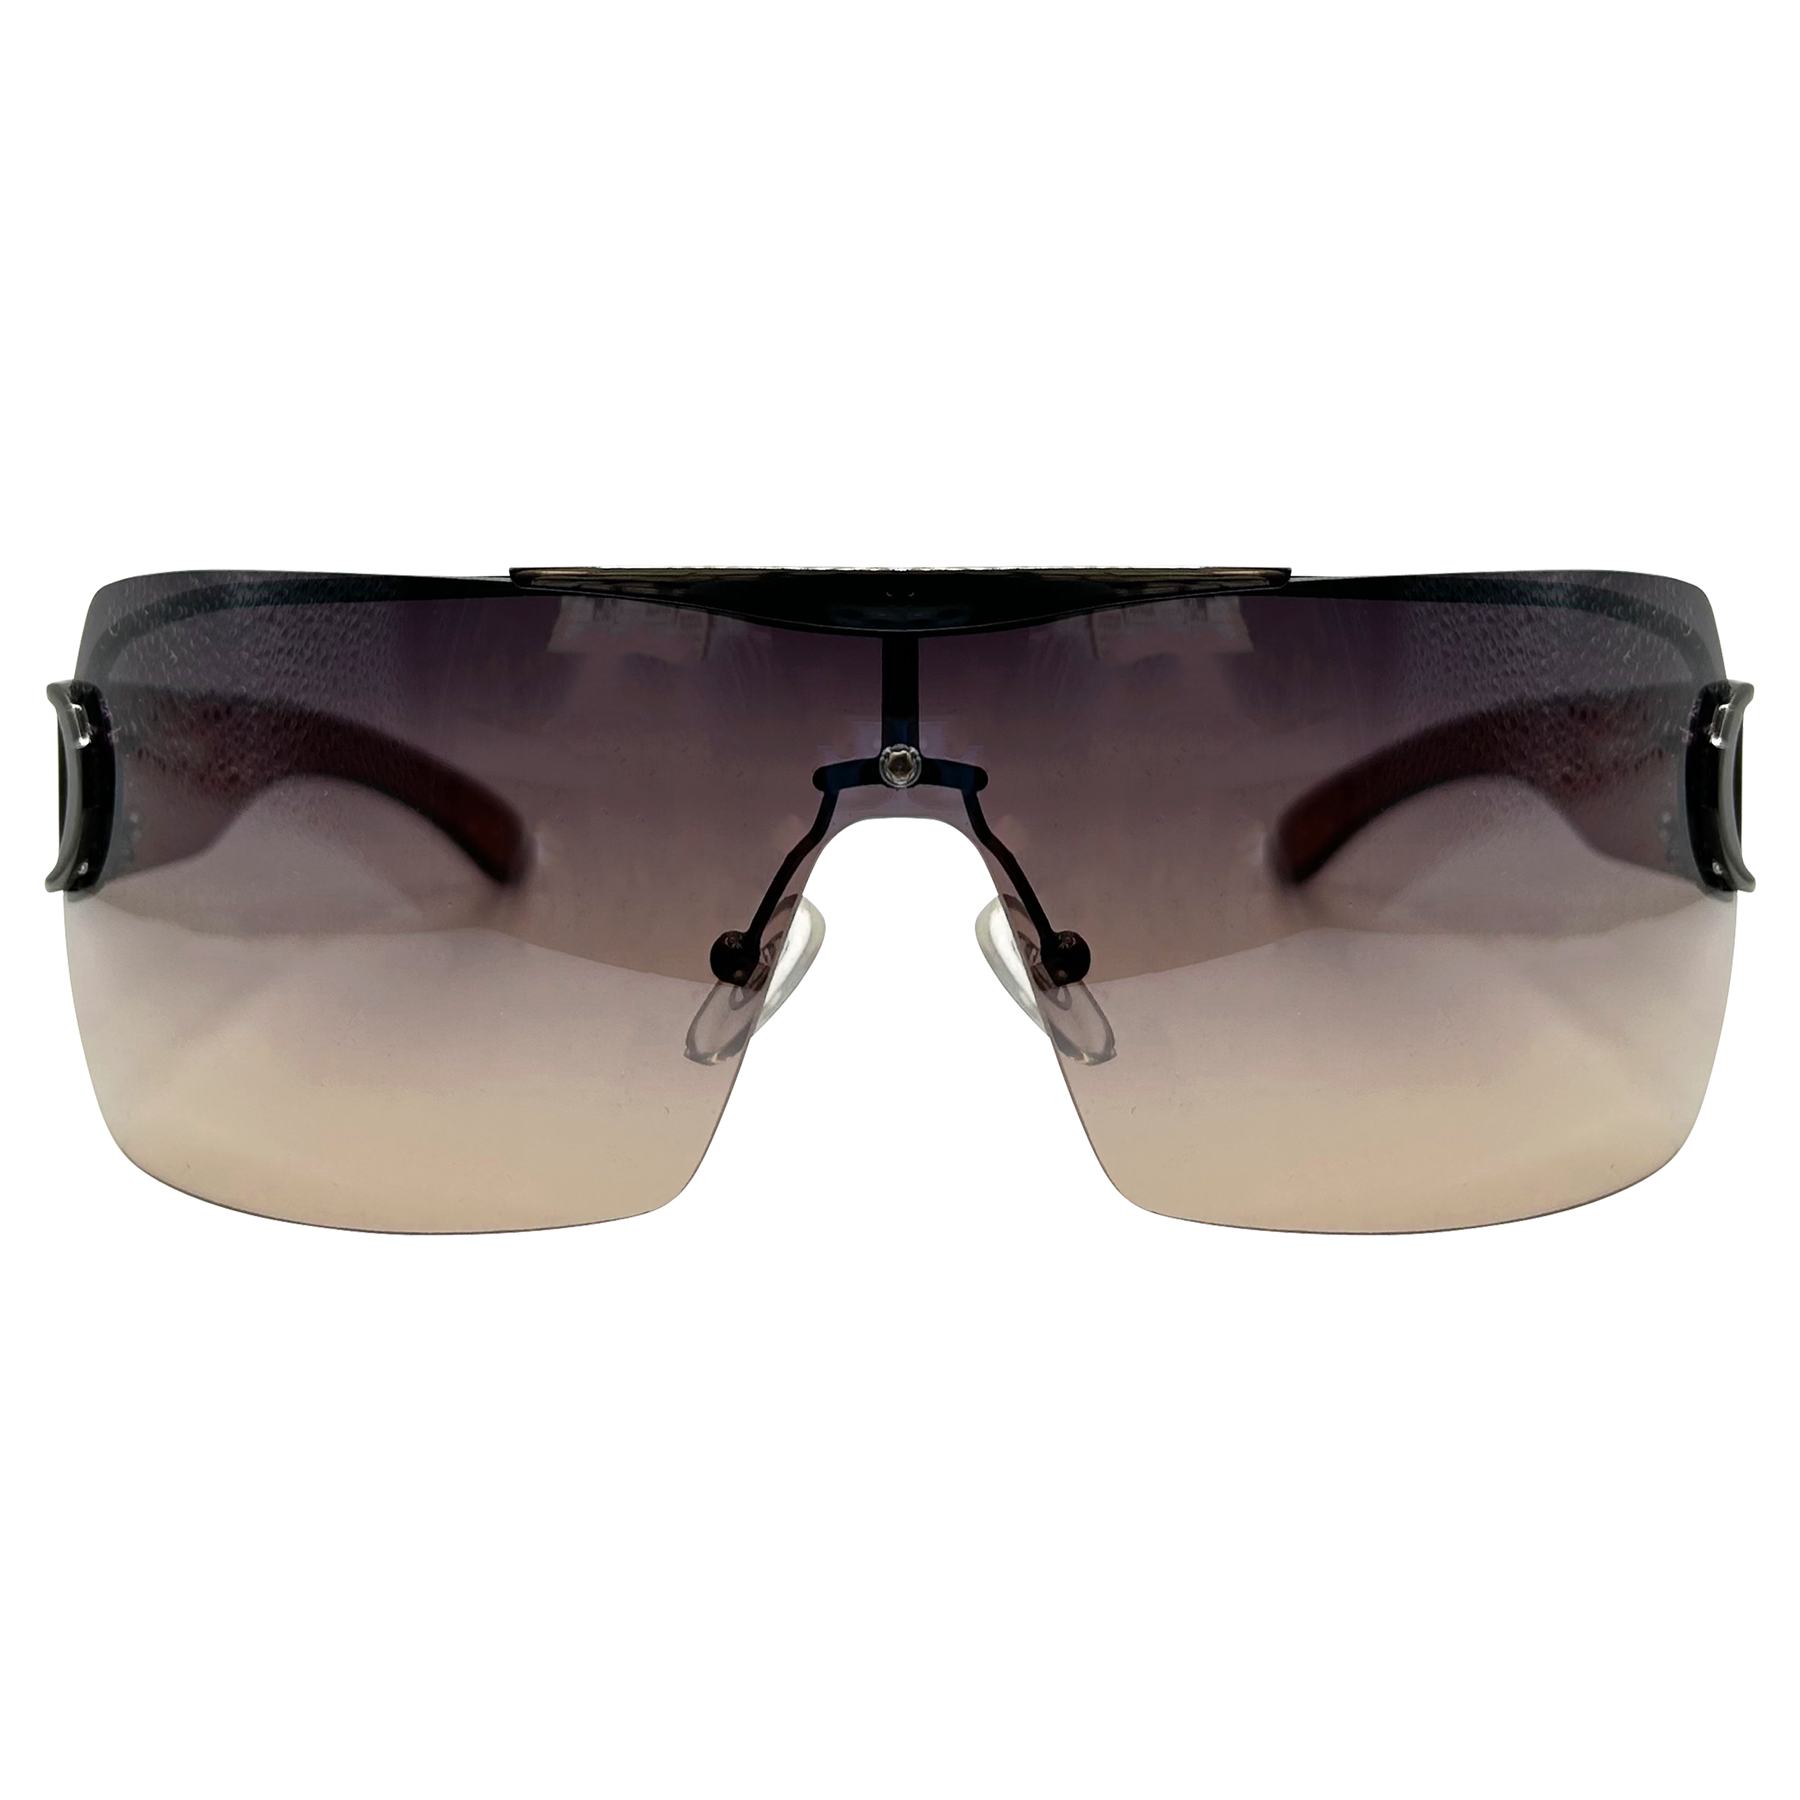 NERVOUS Shield Sunglasses